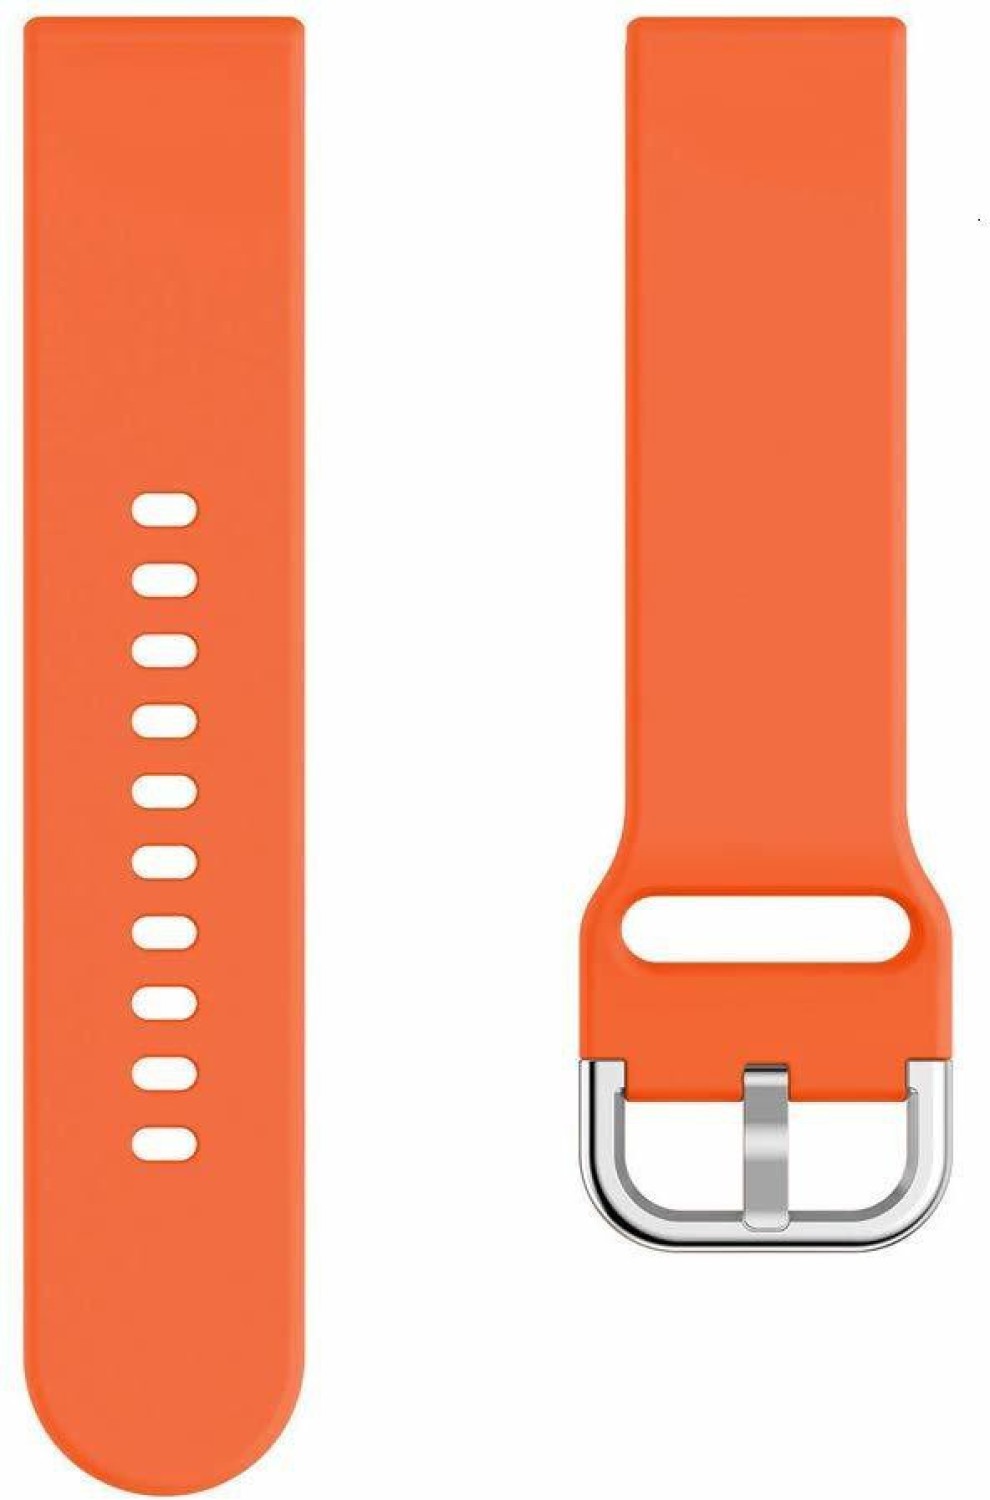 CASEKOO 20MM SILICON HUK Metal Orange Smart Watch Strap (Orange) - Price  History